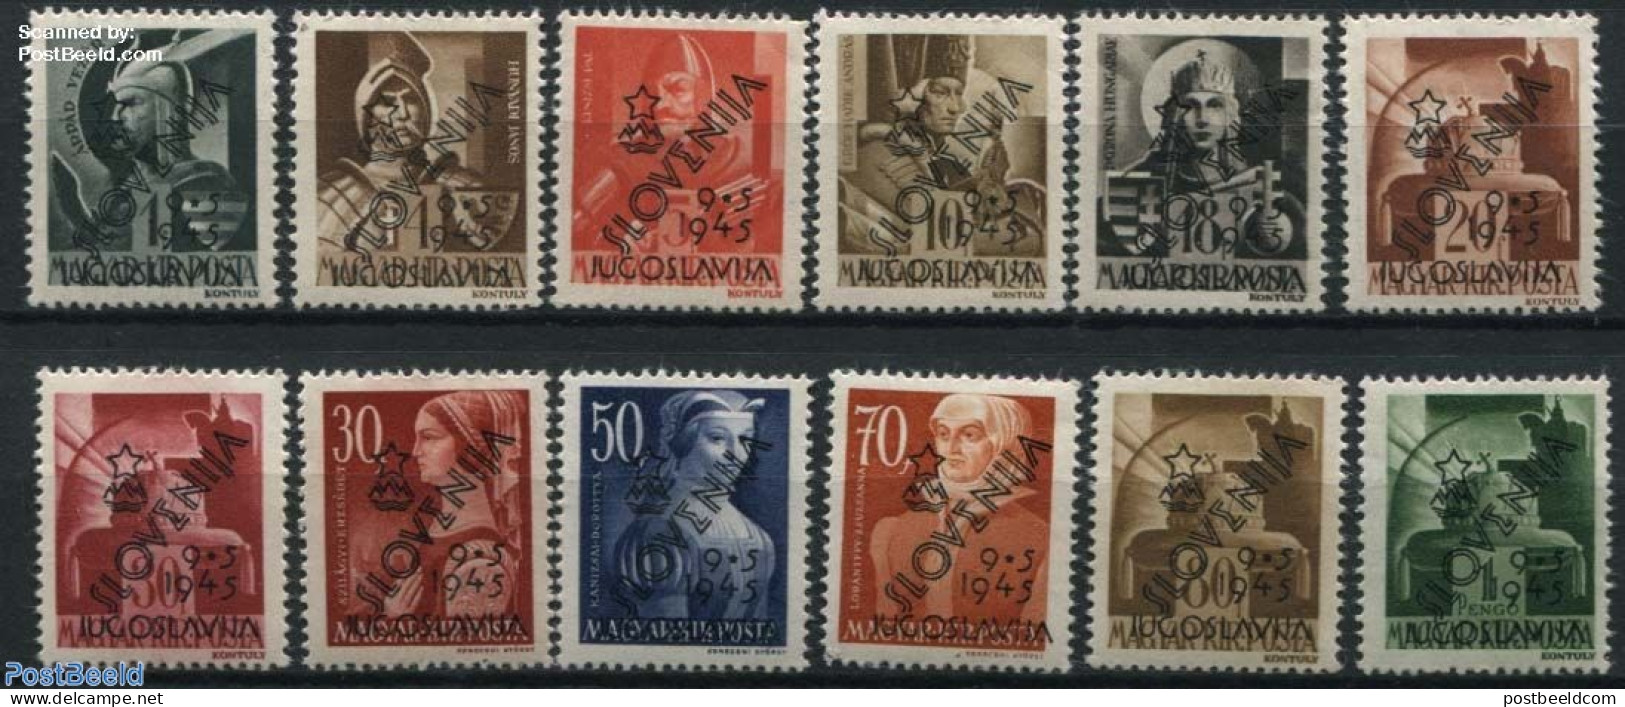 Slovenia 1945 Murska Sobota, Overprints 12v, Mint NH - Eslovenia